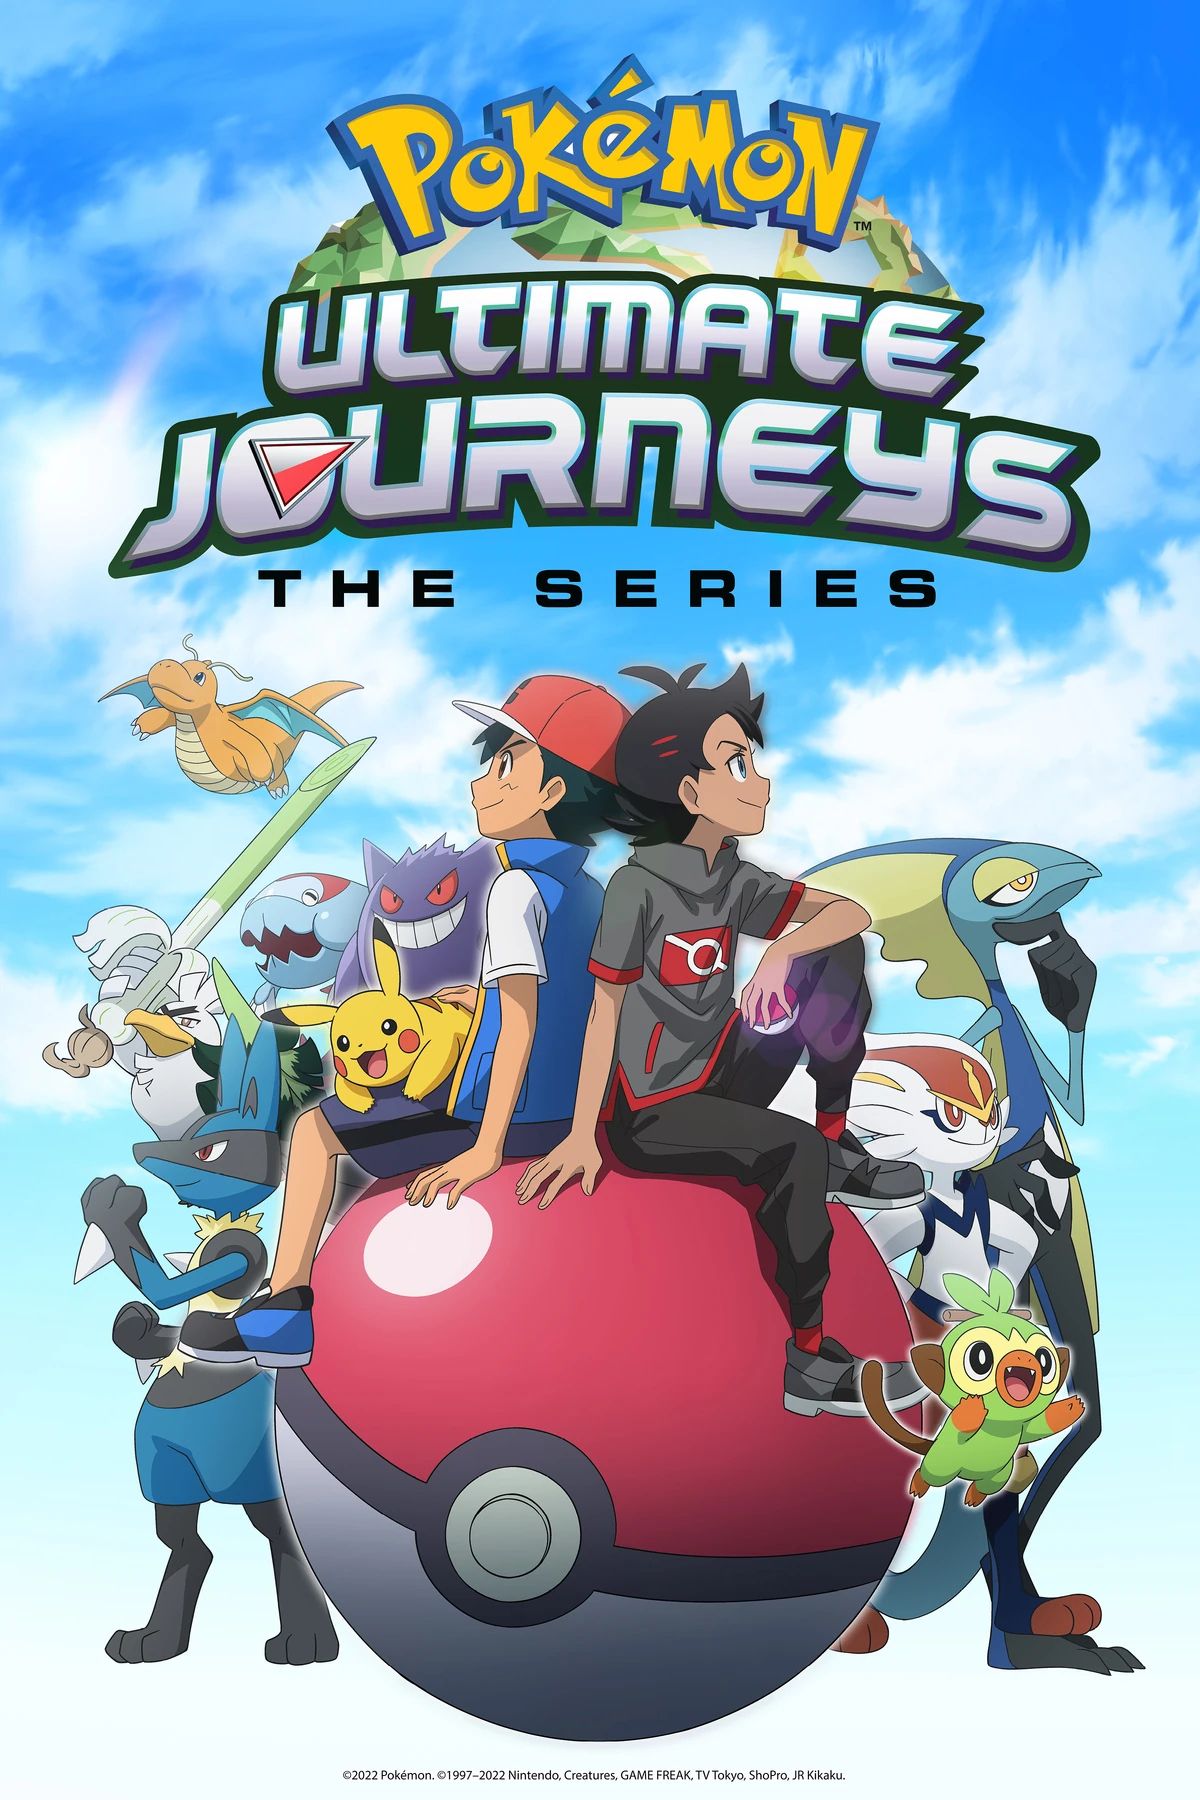 Pokemon Ultimate Journeys The Series TV Poster